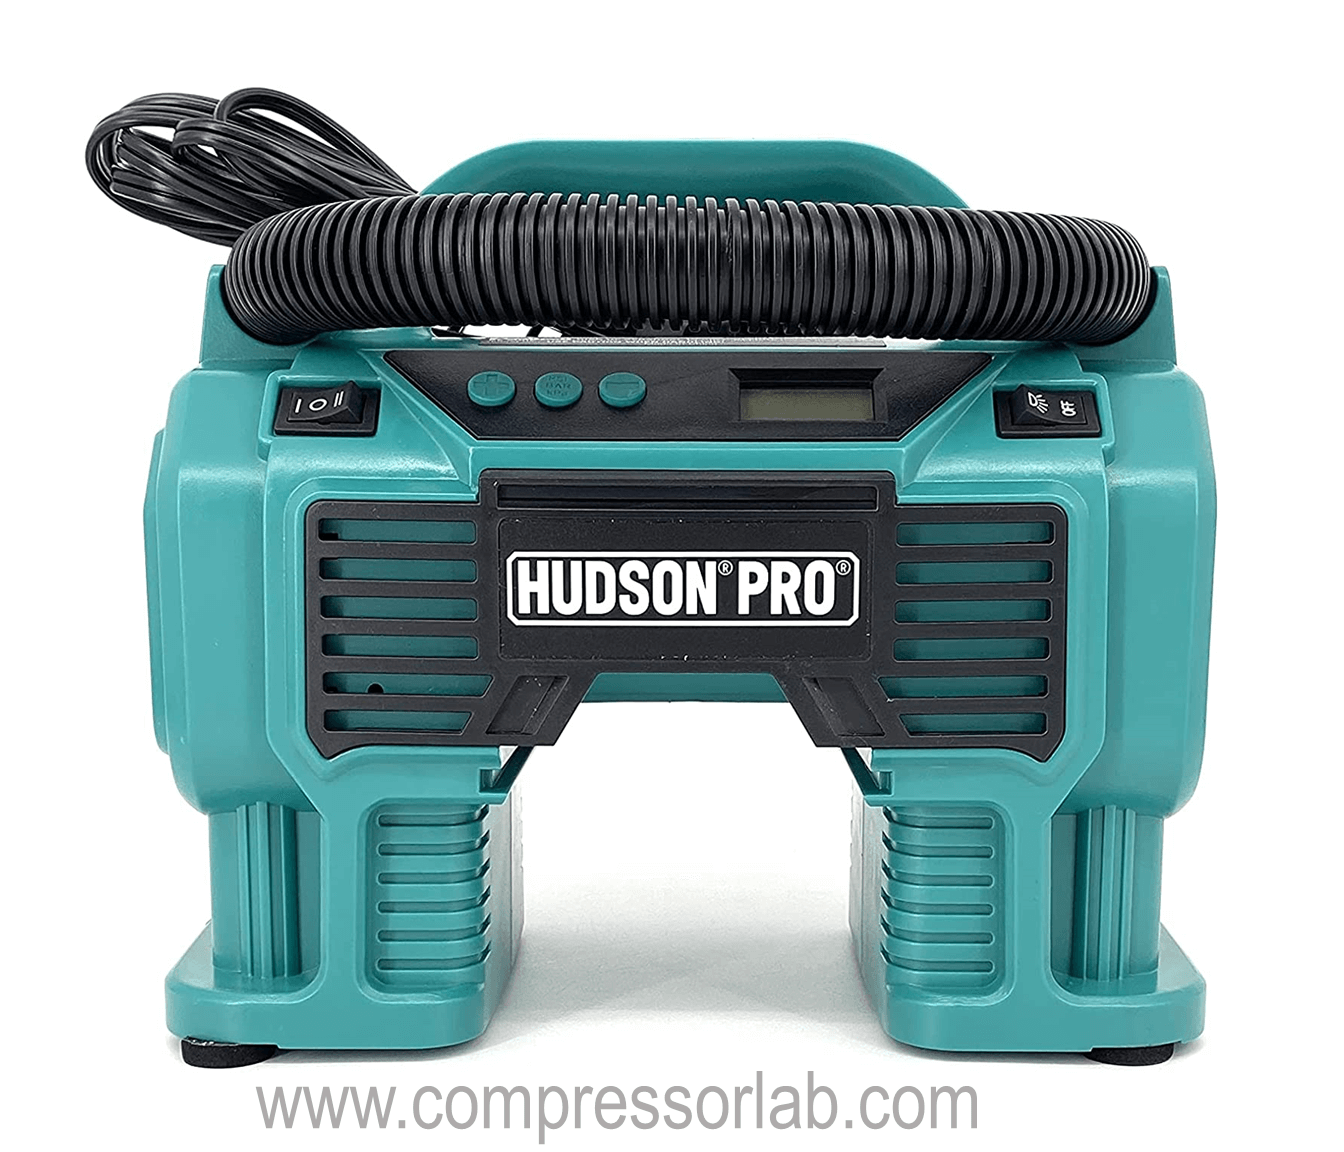 Hudson Pro 23001 12V Deflator Inflator